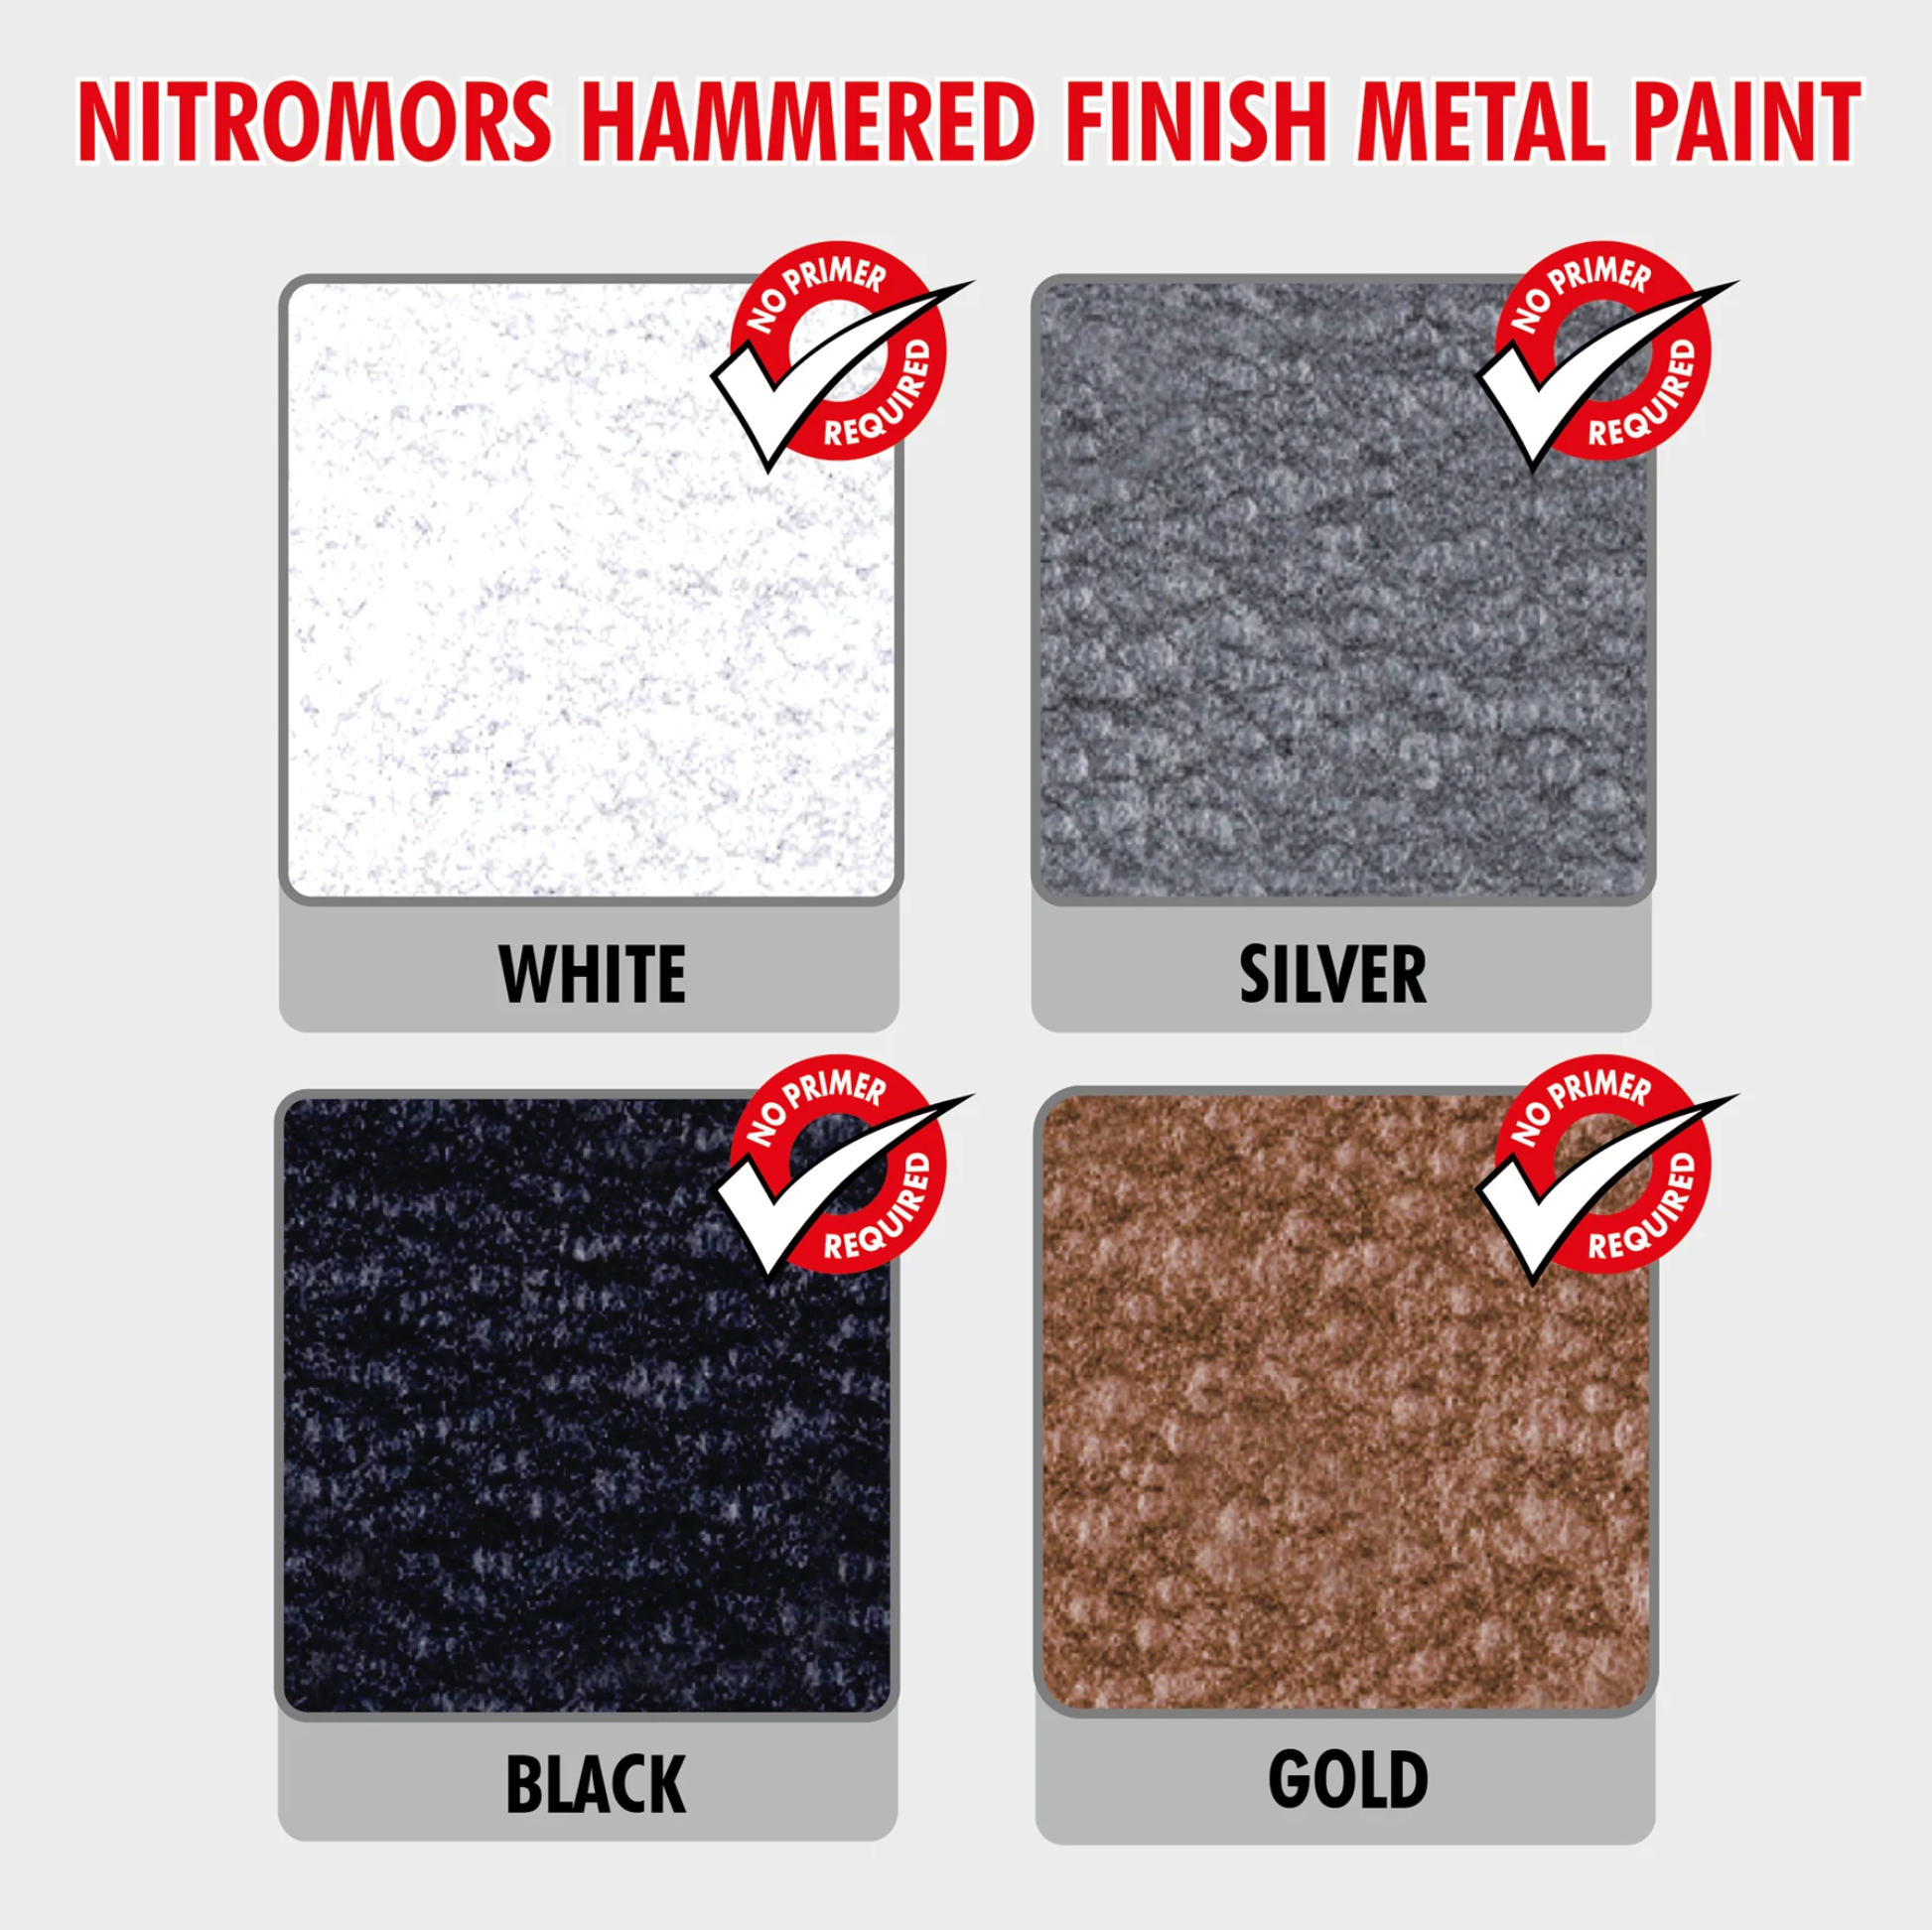 NitroMors Hammered Finish Metal Paint